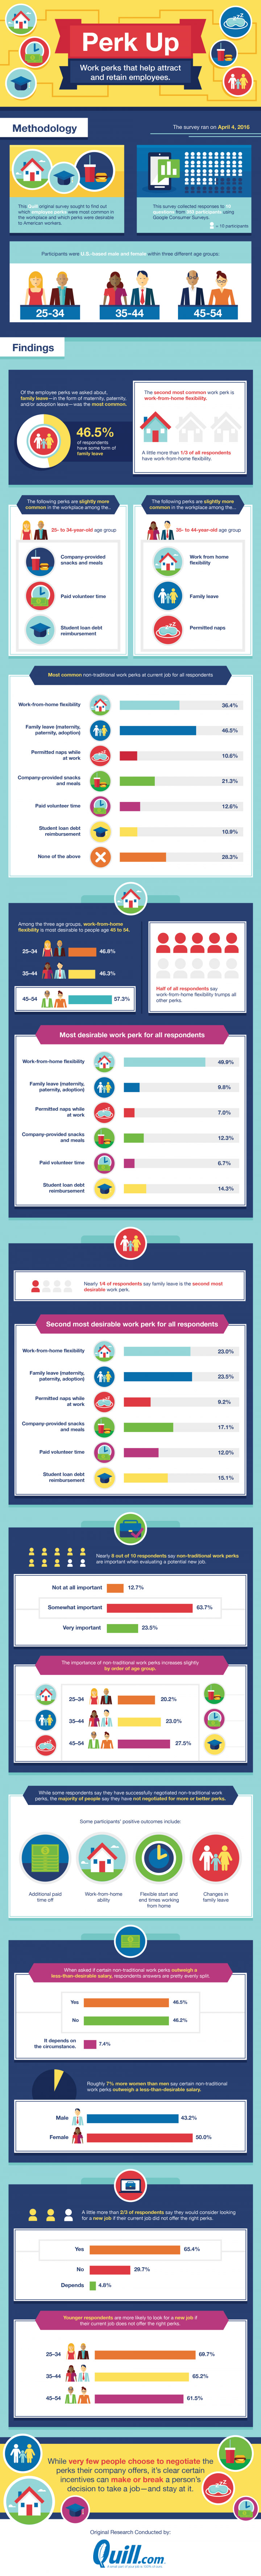 employee-perks-survey-infographic-720x7093